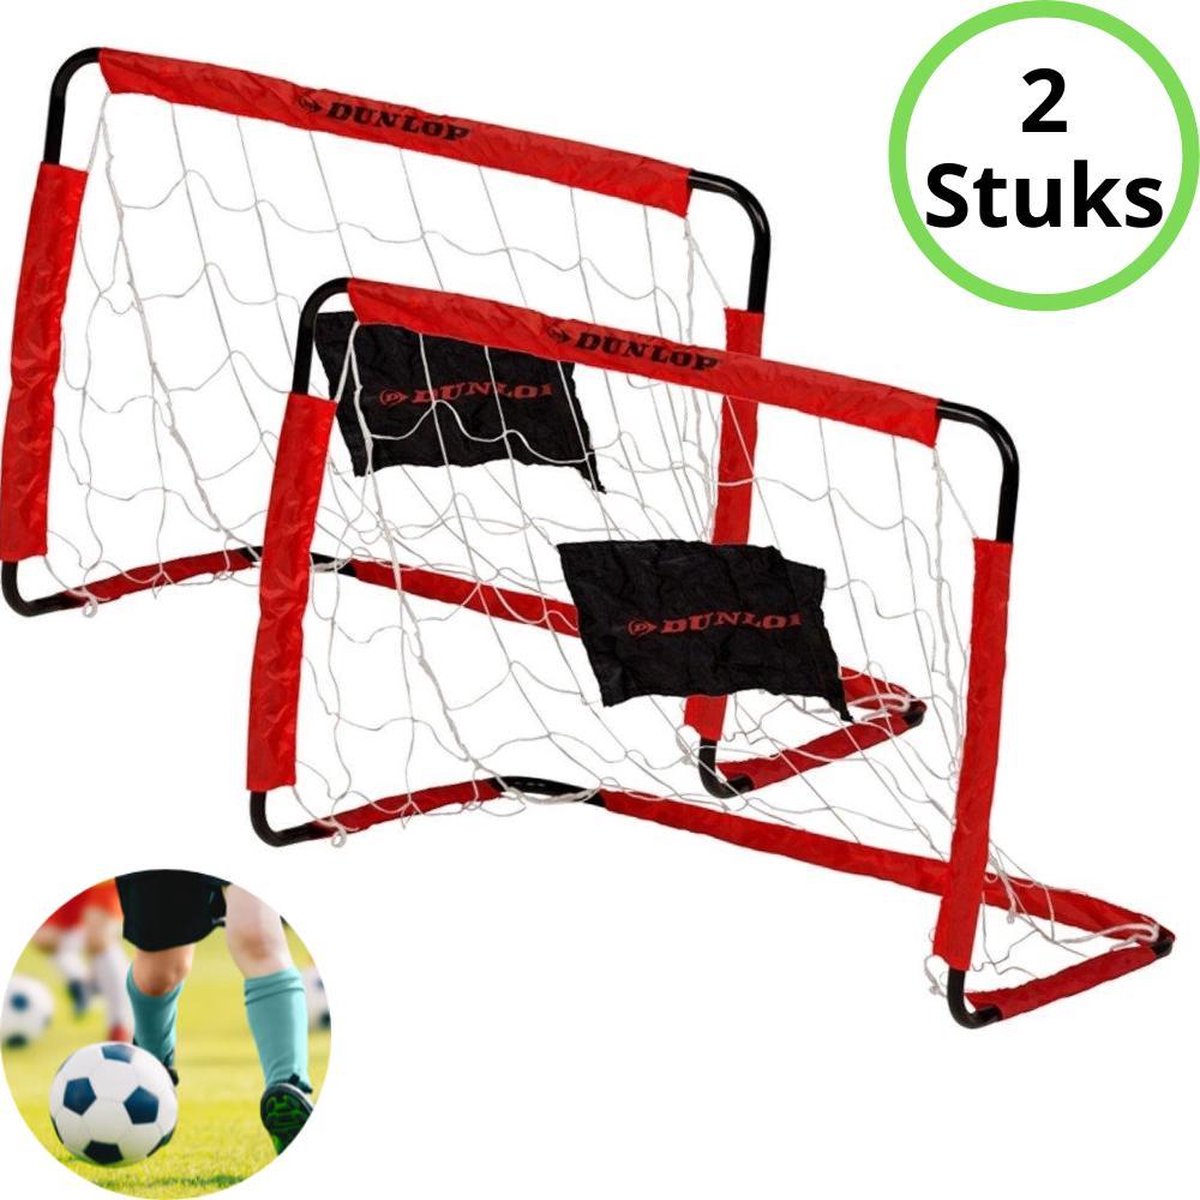 Dunlop Voetbaldoelen - Soccer Goal - 2 Stuks.. - Dunlop